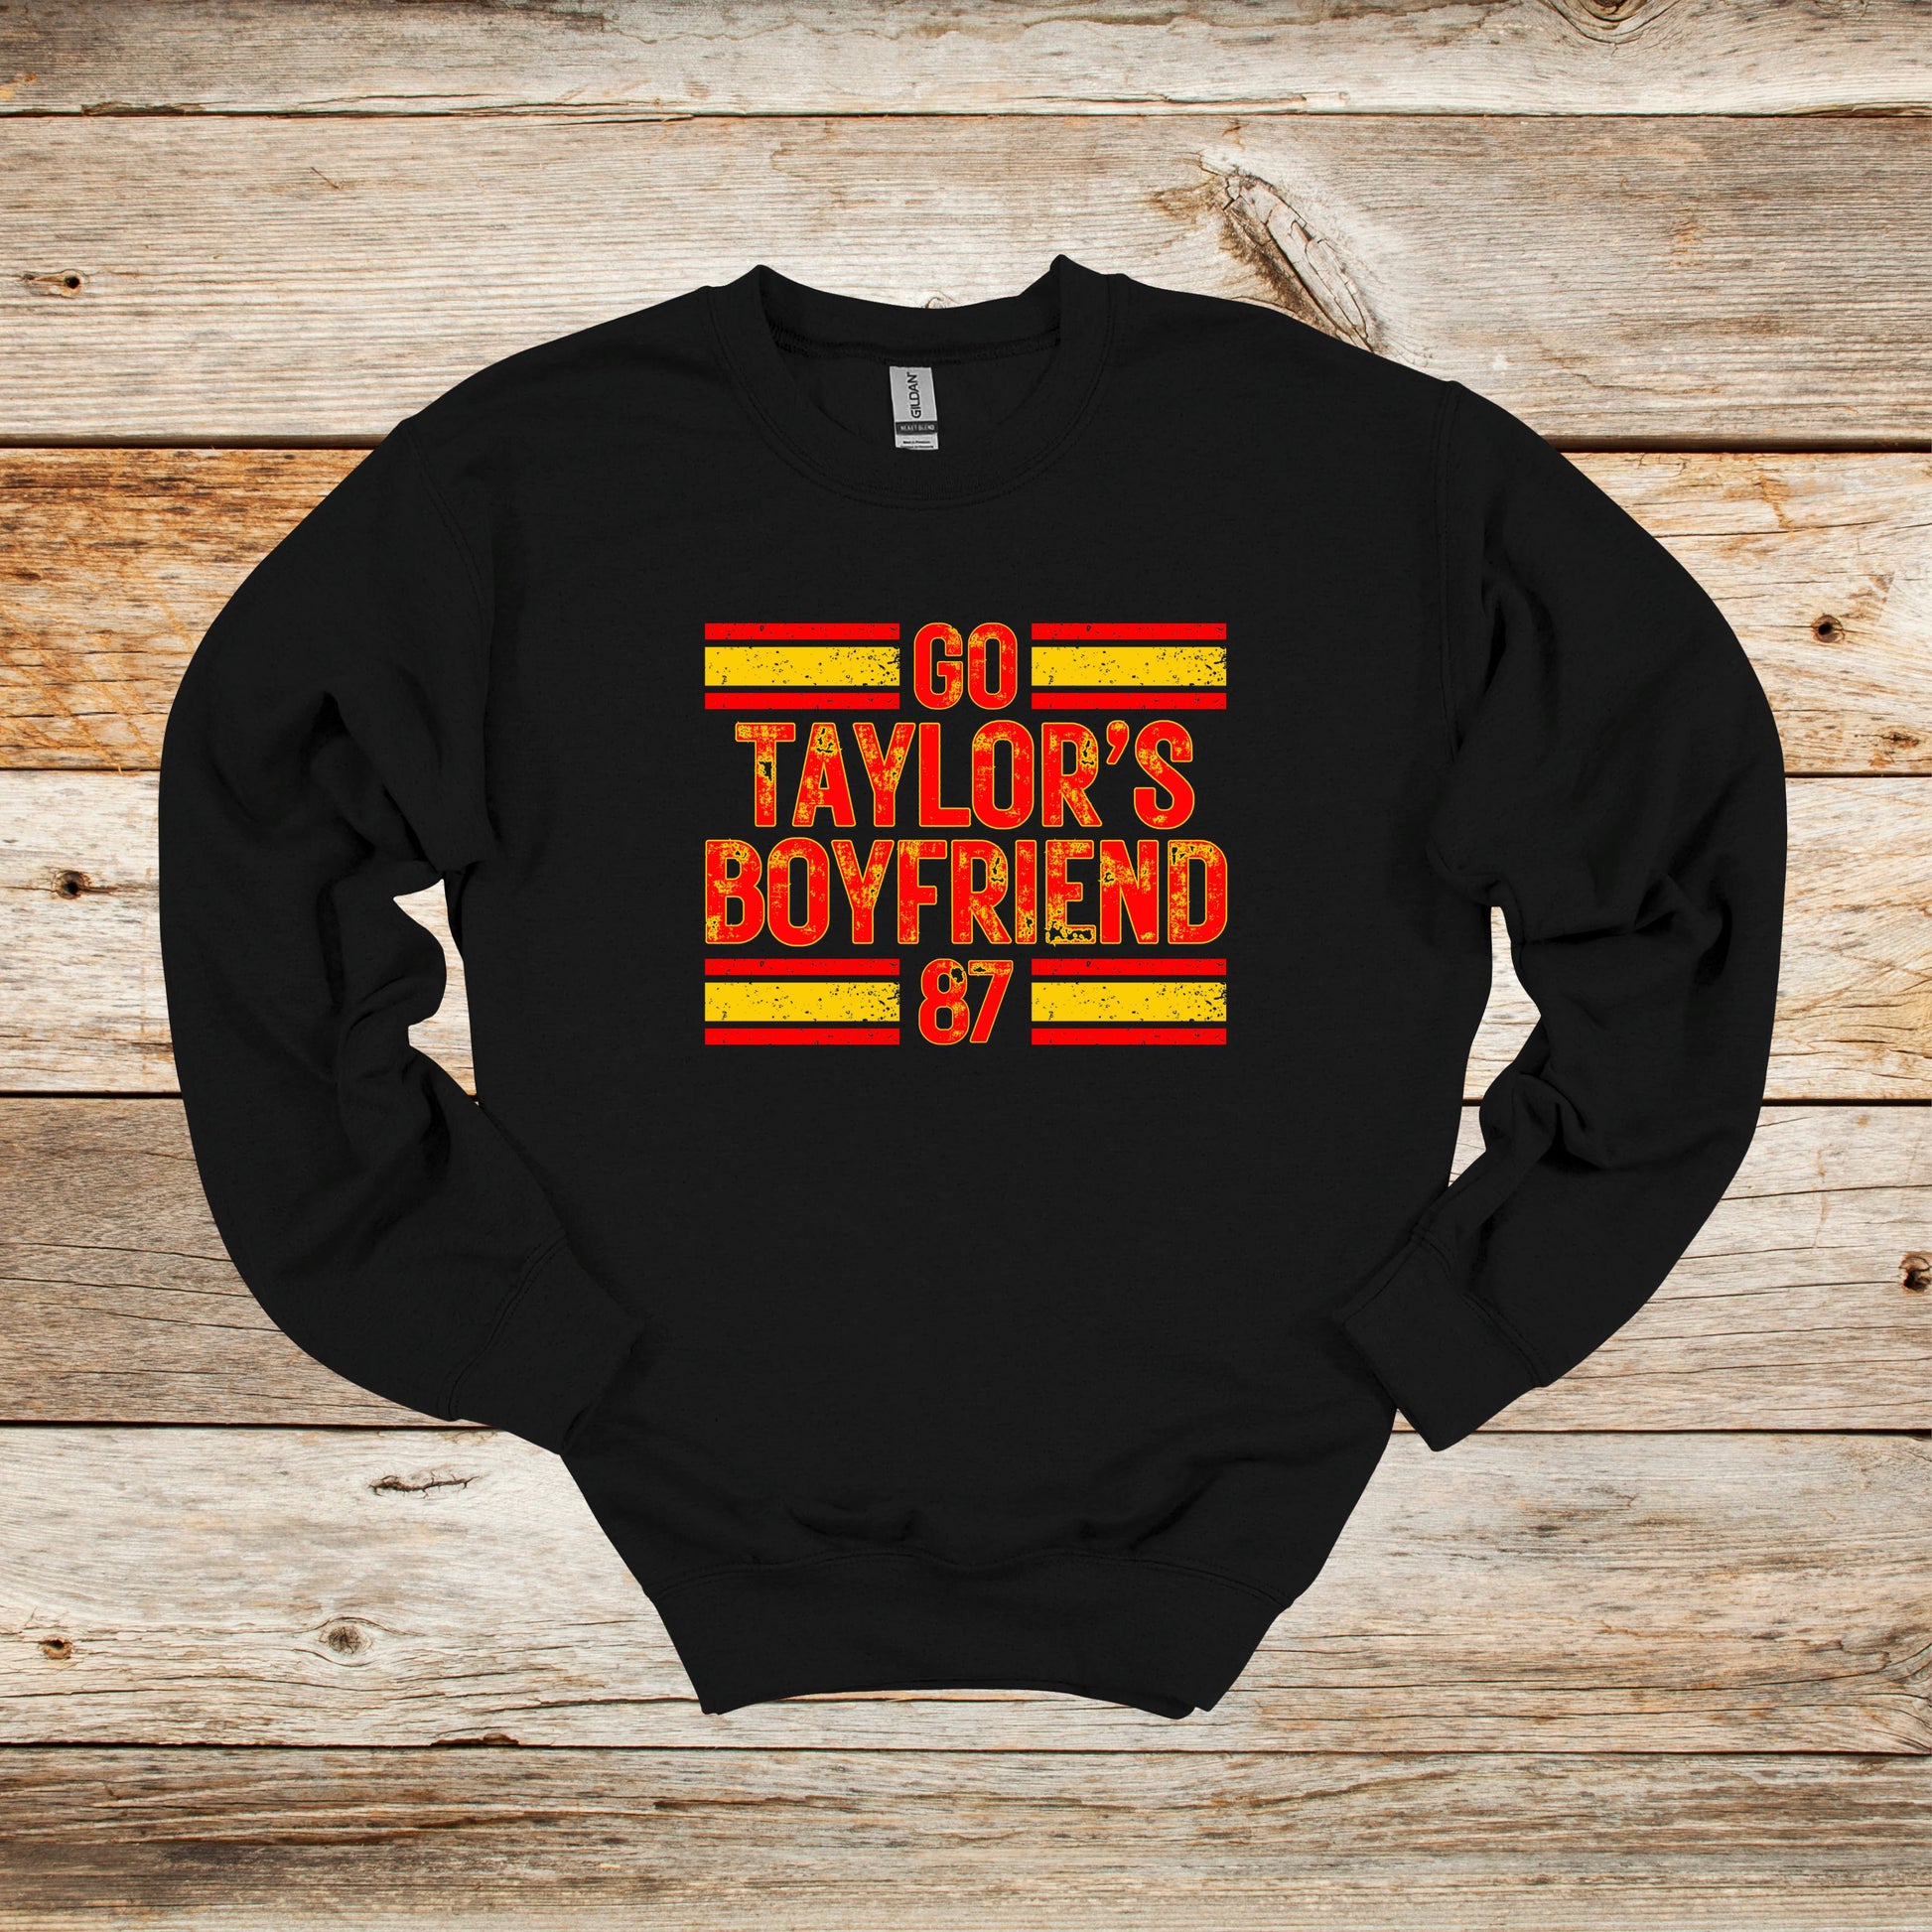 Football Crewneck and Hooded Sweatshirt - Kansas City Chiefs Football - Go Taylor's Boyfriend - Adult and Children's Tee Shirts - Sports Hooded Sweatshirt Graphic Avenue Crewneck Sweatshirt Black Adult Small